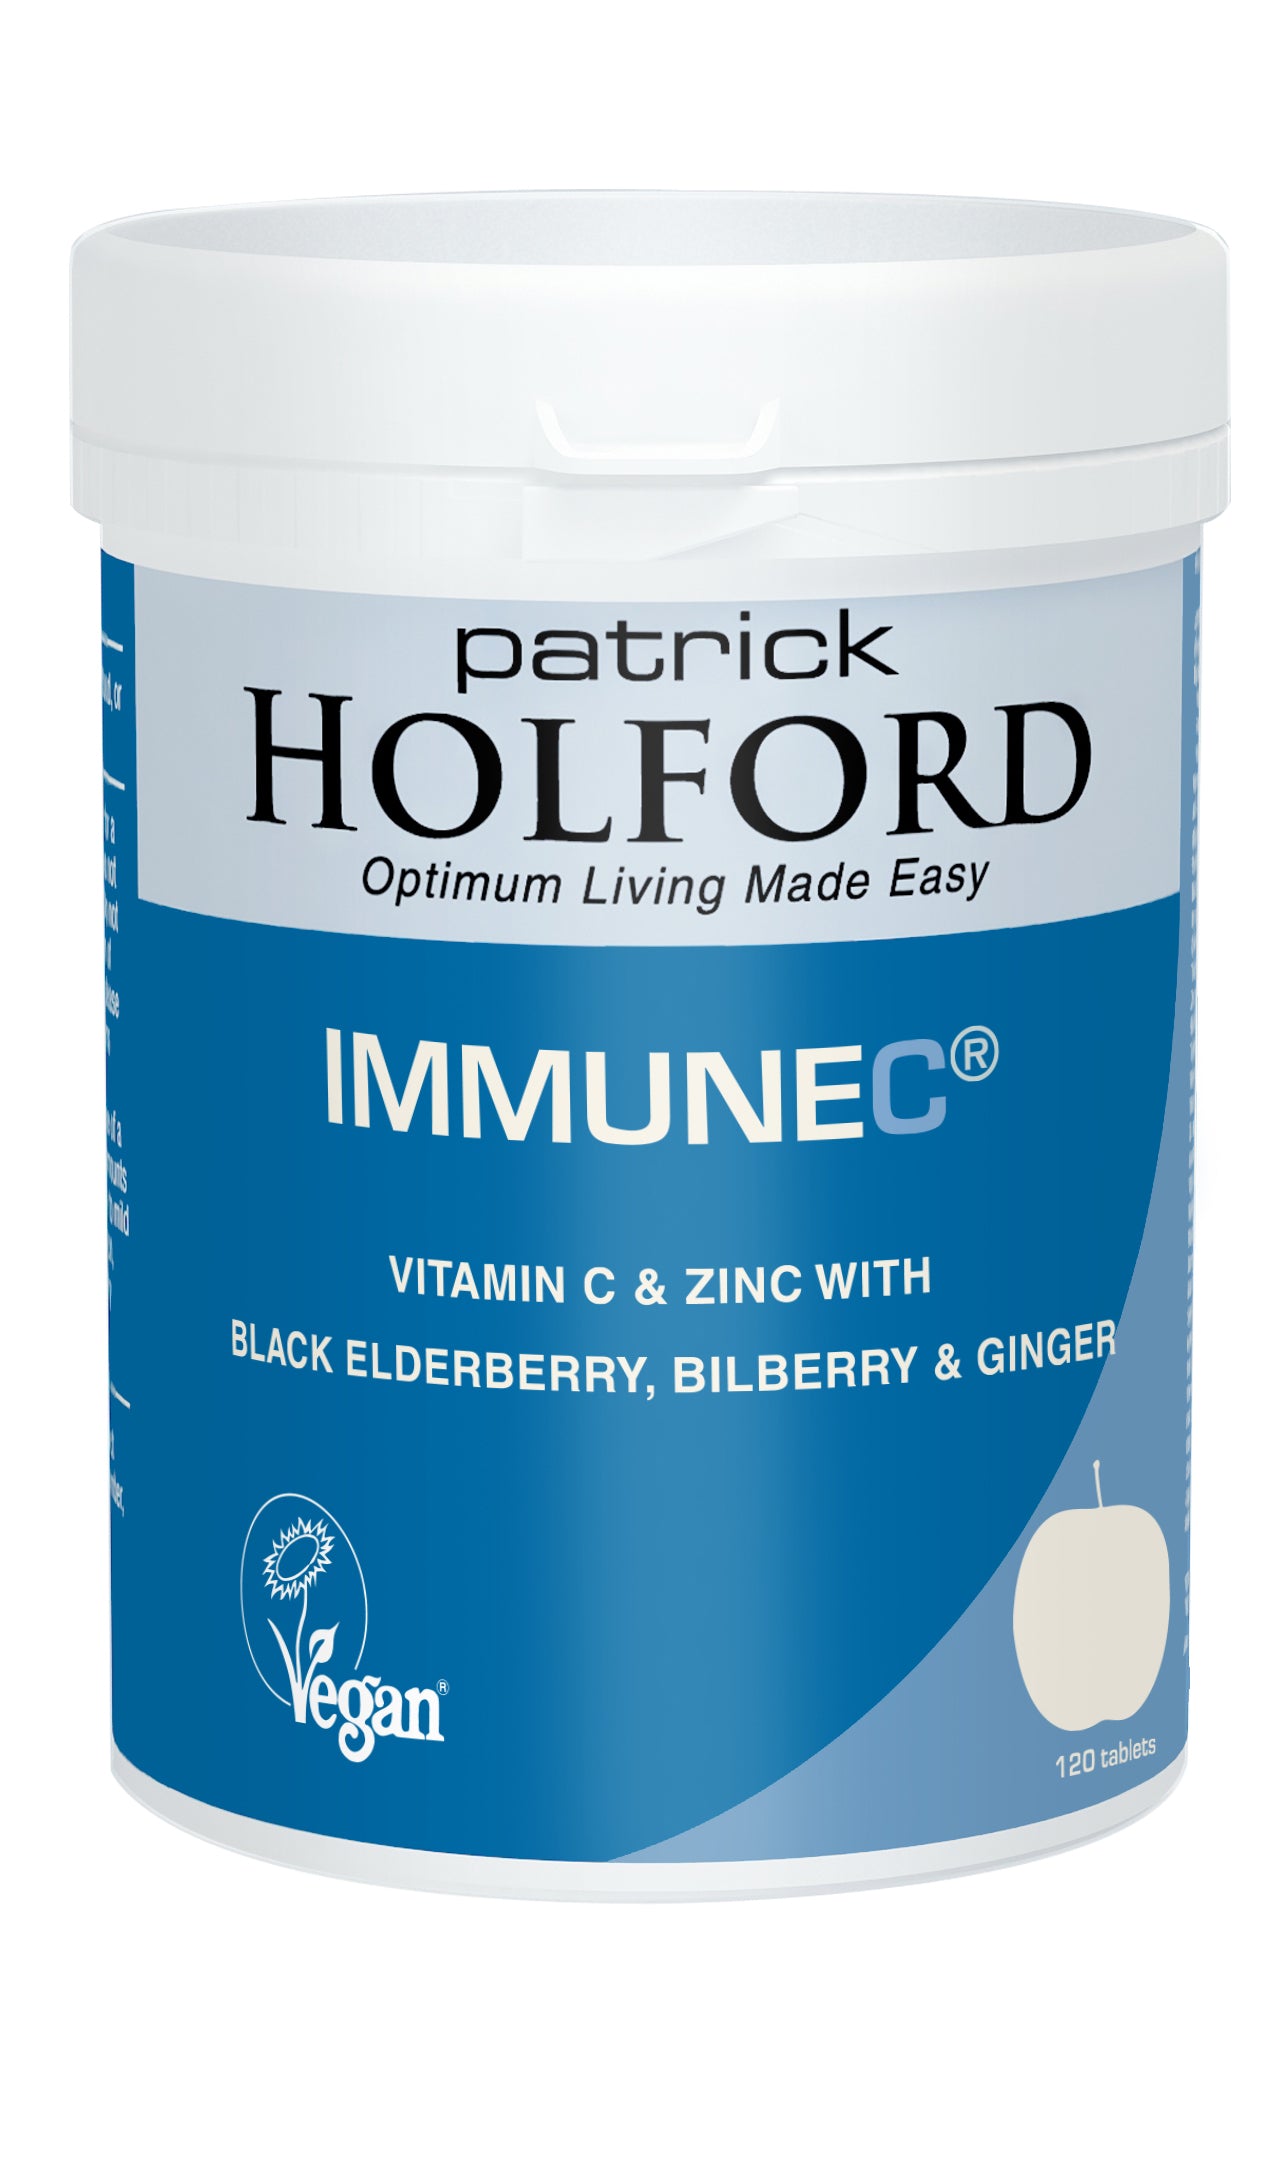 Patrick Holford ImmuneC